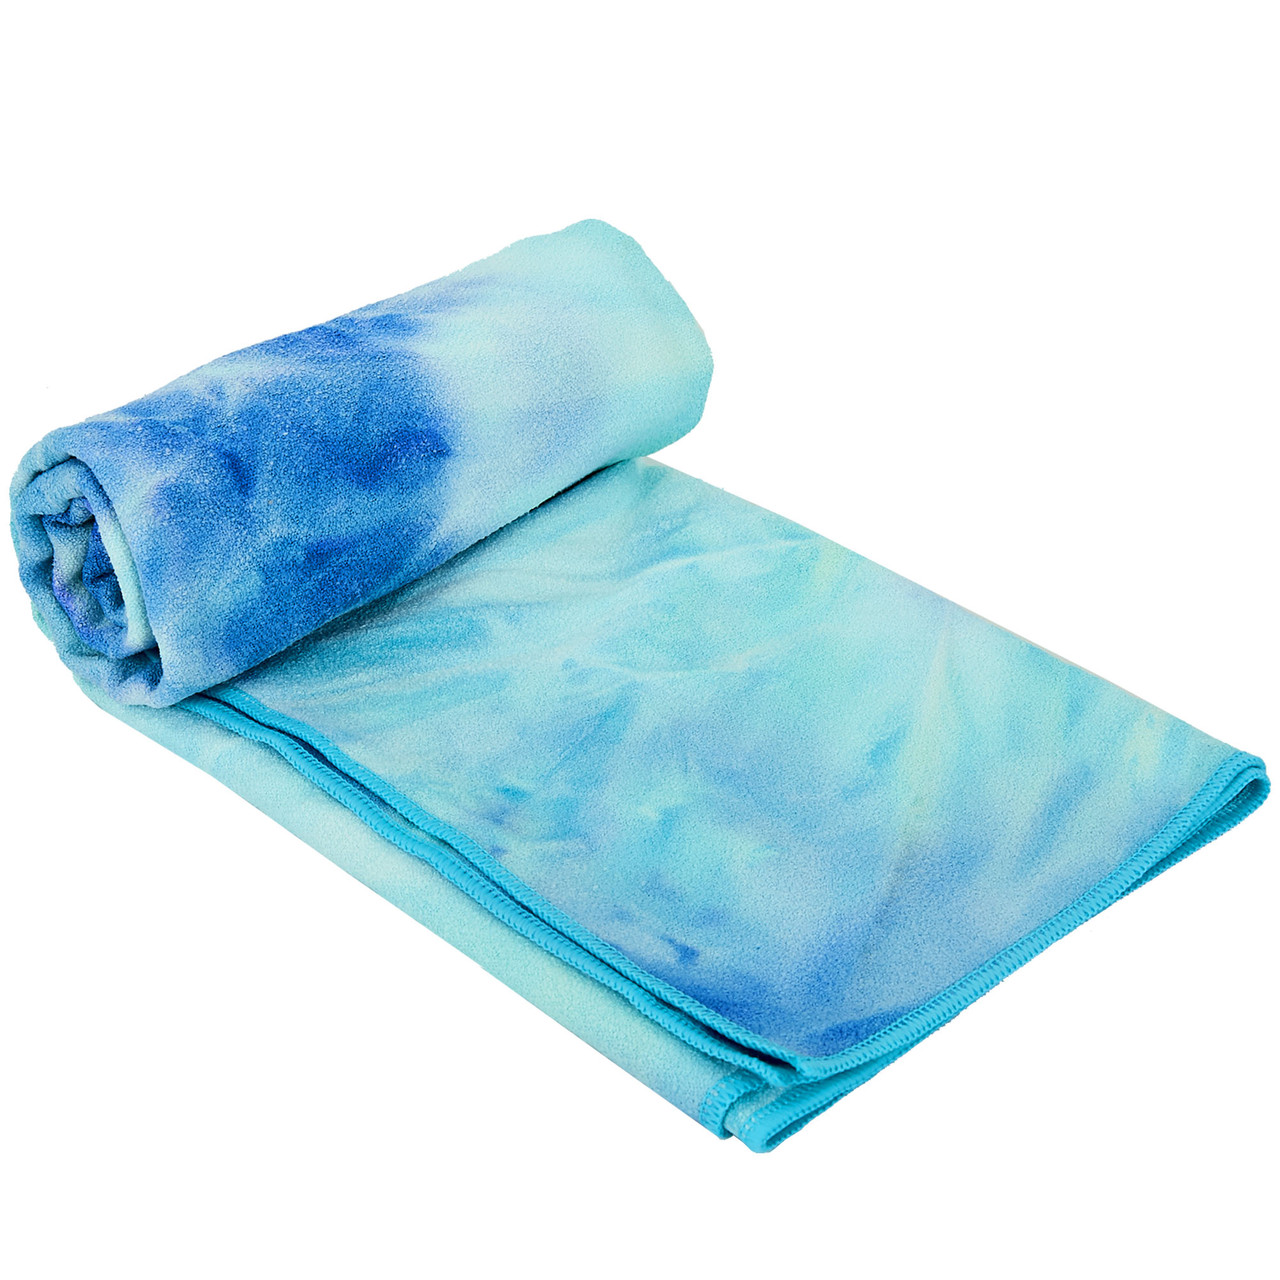 Йога полотенце (коврик для йоги) KINDFOLK FI-8370 (размер 1,83мx0,61м, микрофибра, цвета в ассортименте)